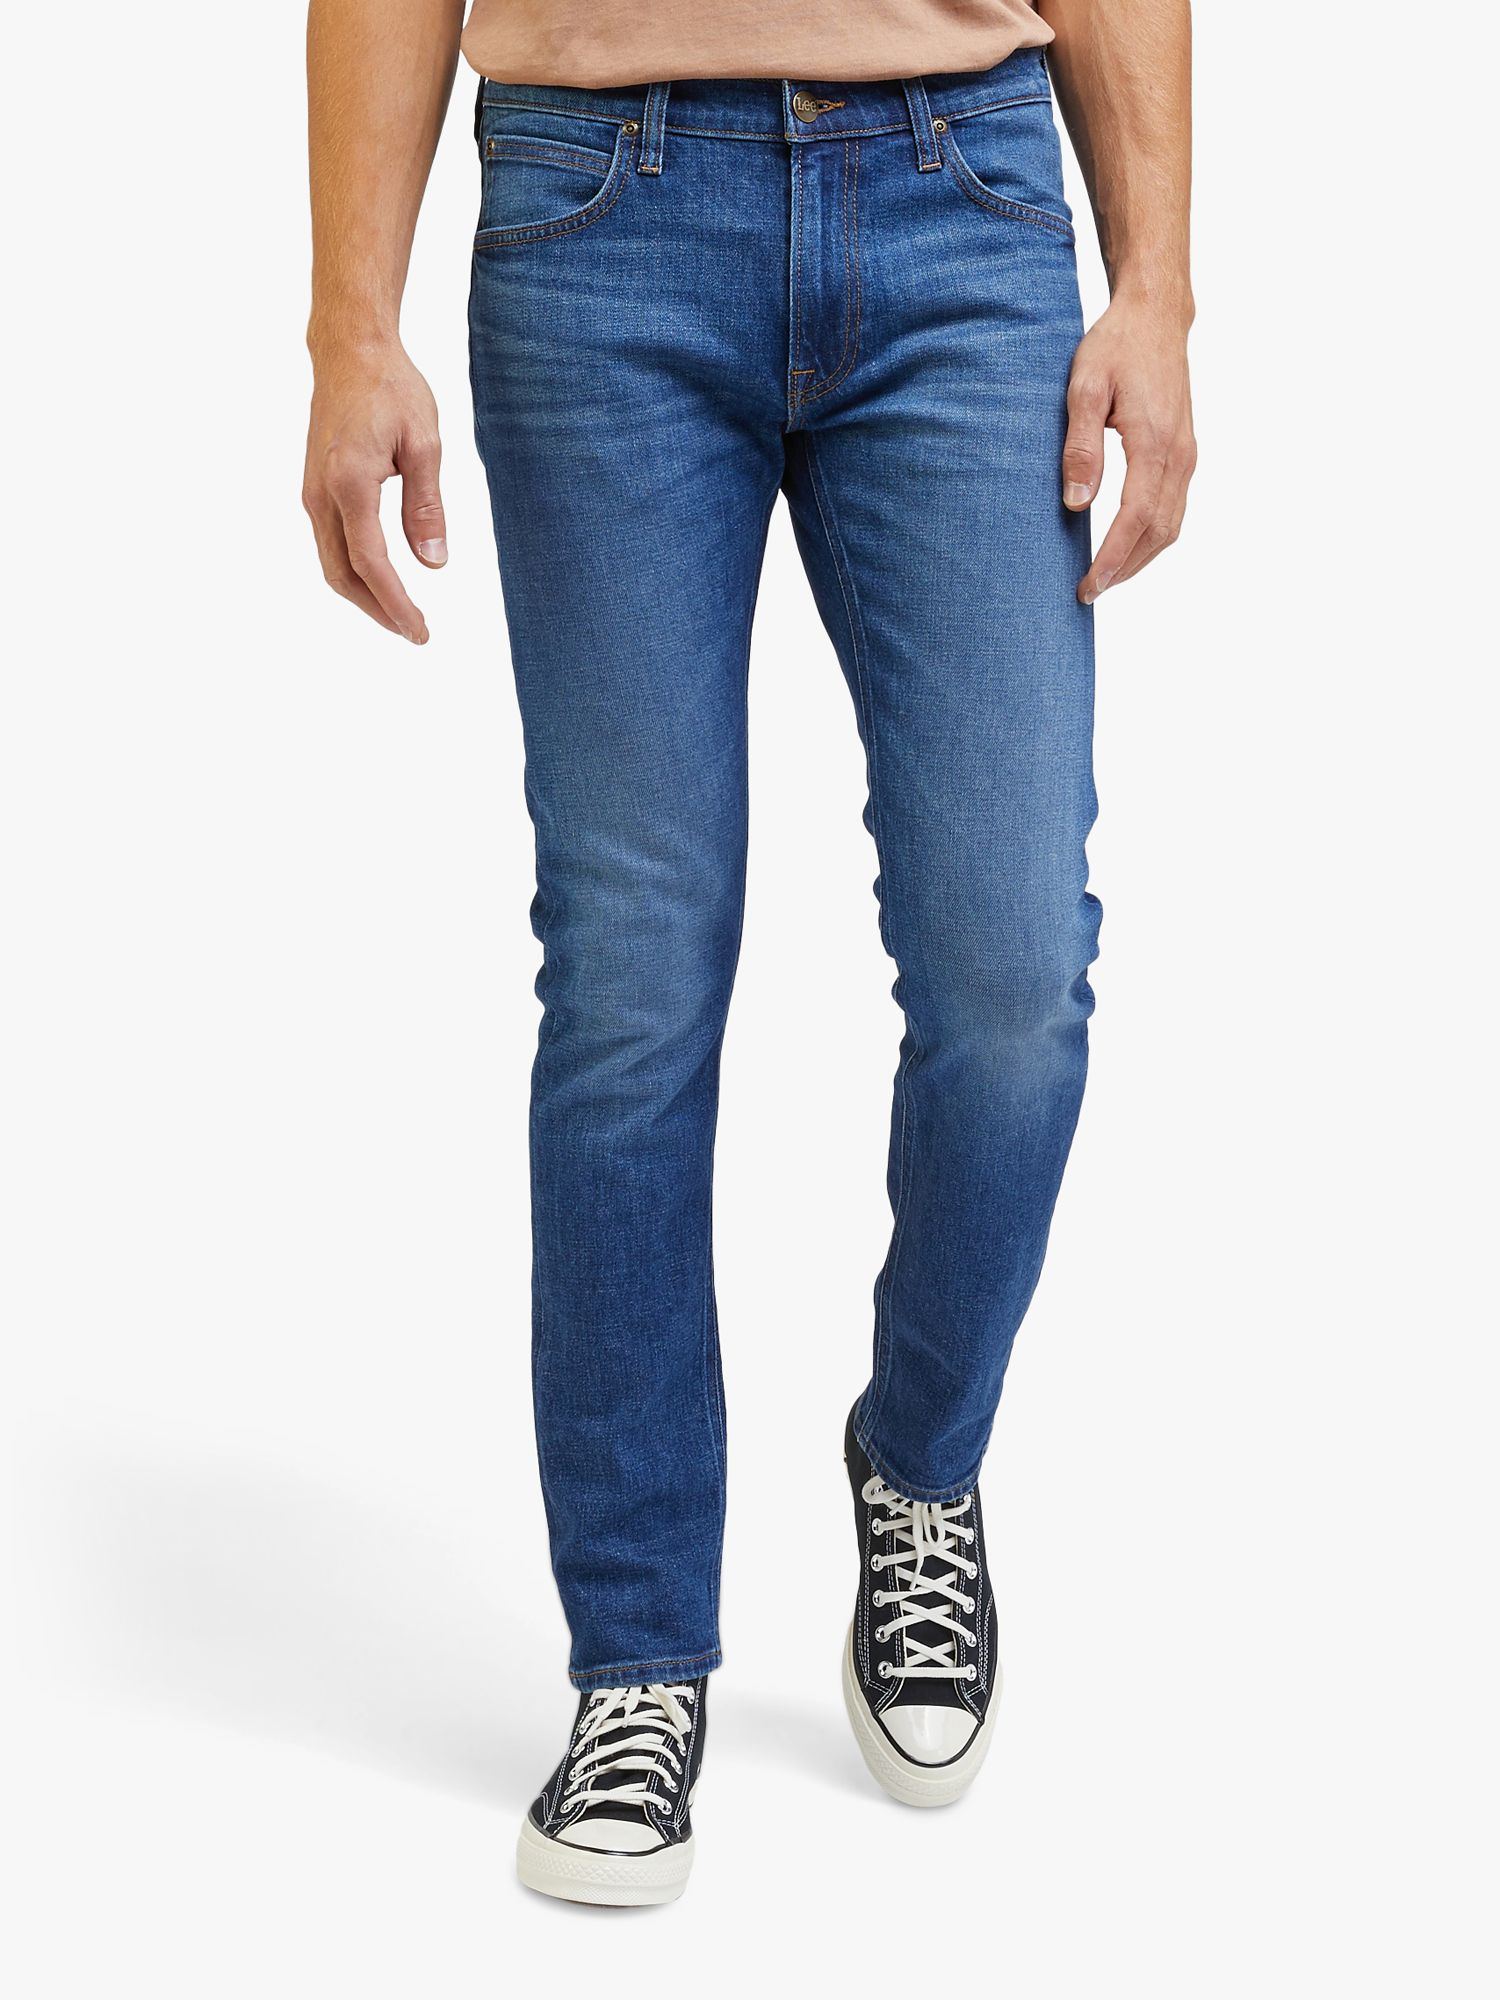 Lee Luke Stone Wash Slim Fit Jeans, Worn In, 30S